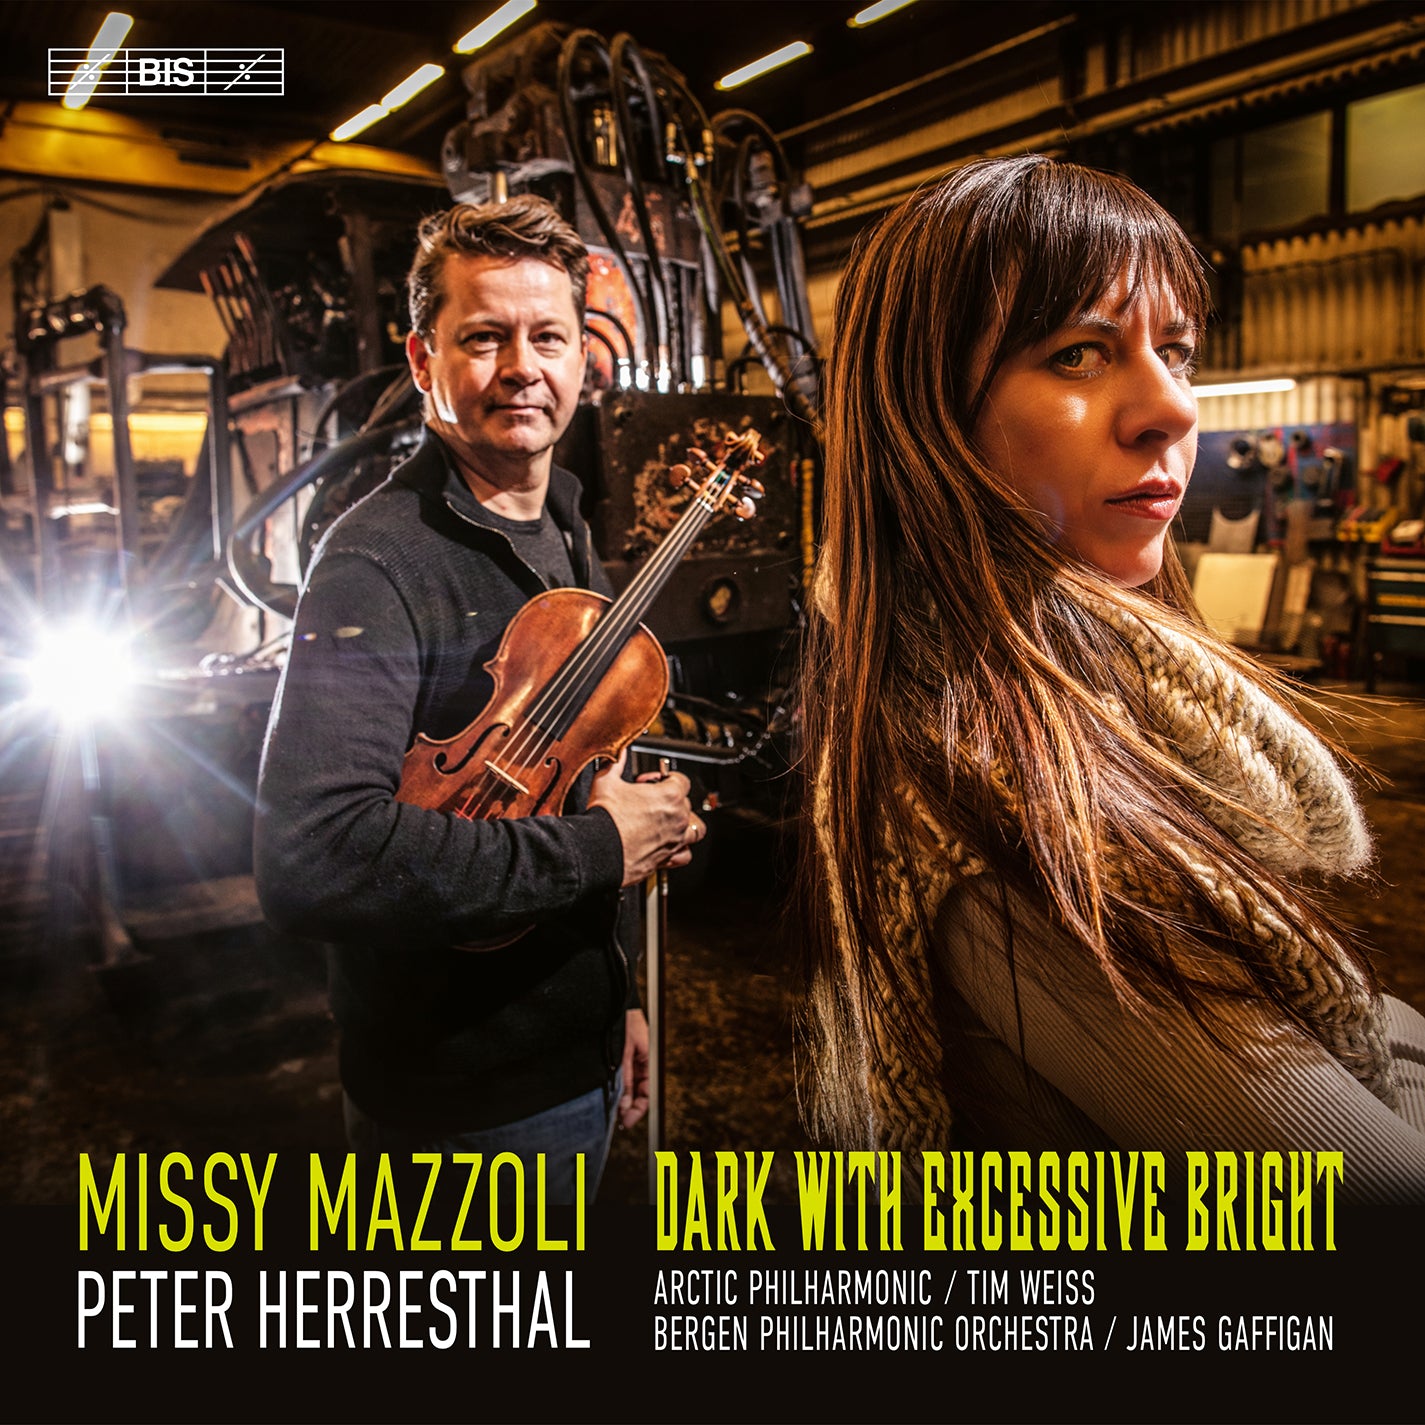 Mazzoli: Dark with Excessive Bright / Herresthal, Gaffigan, Arctic & Bergen Philharmonic